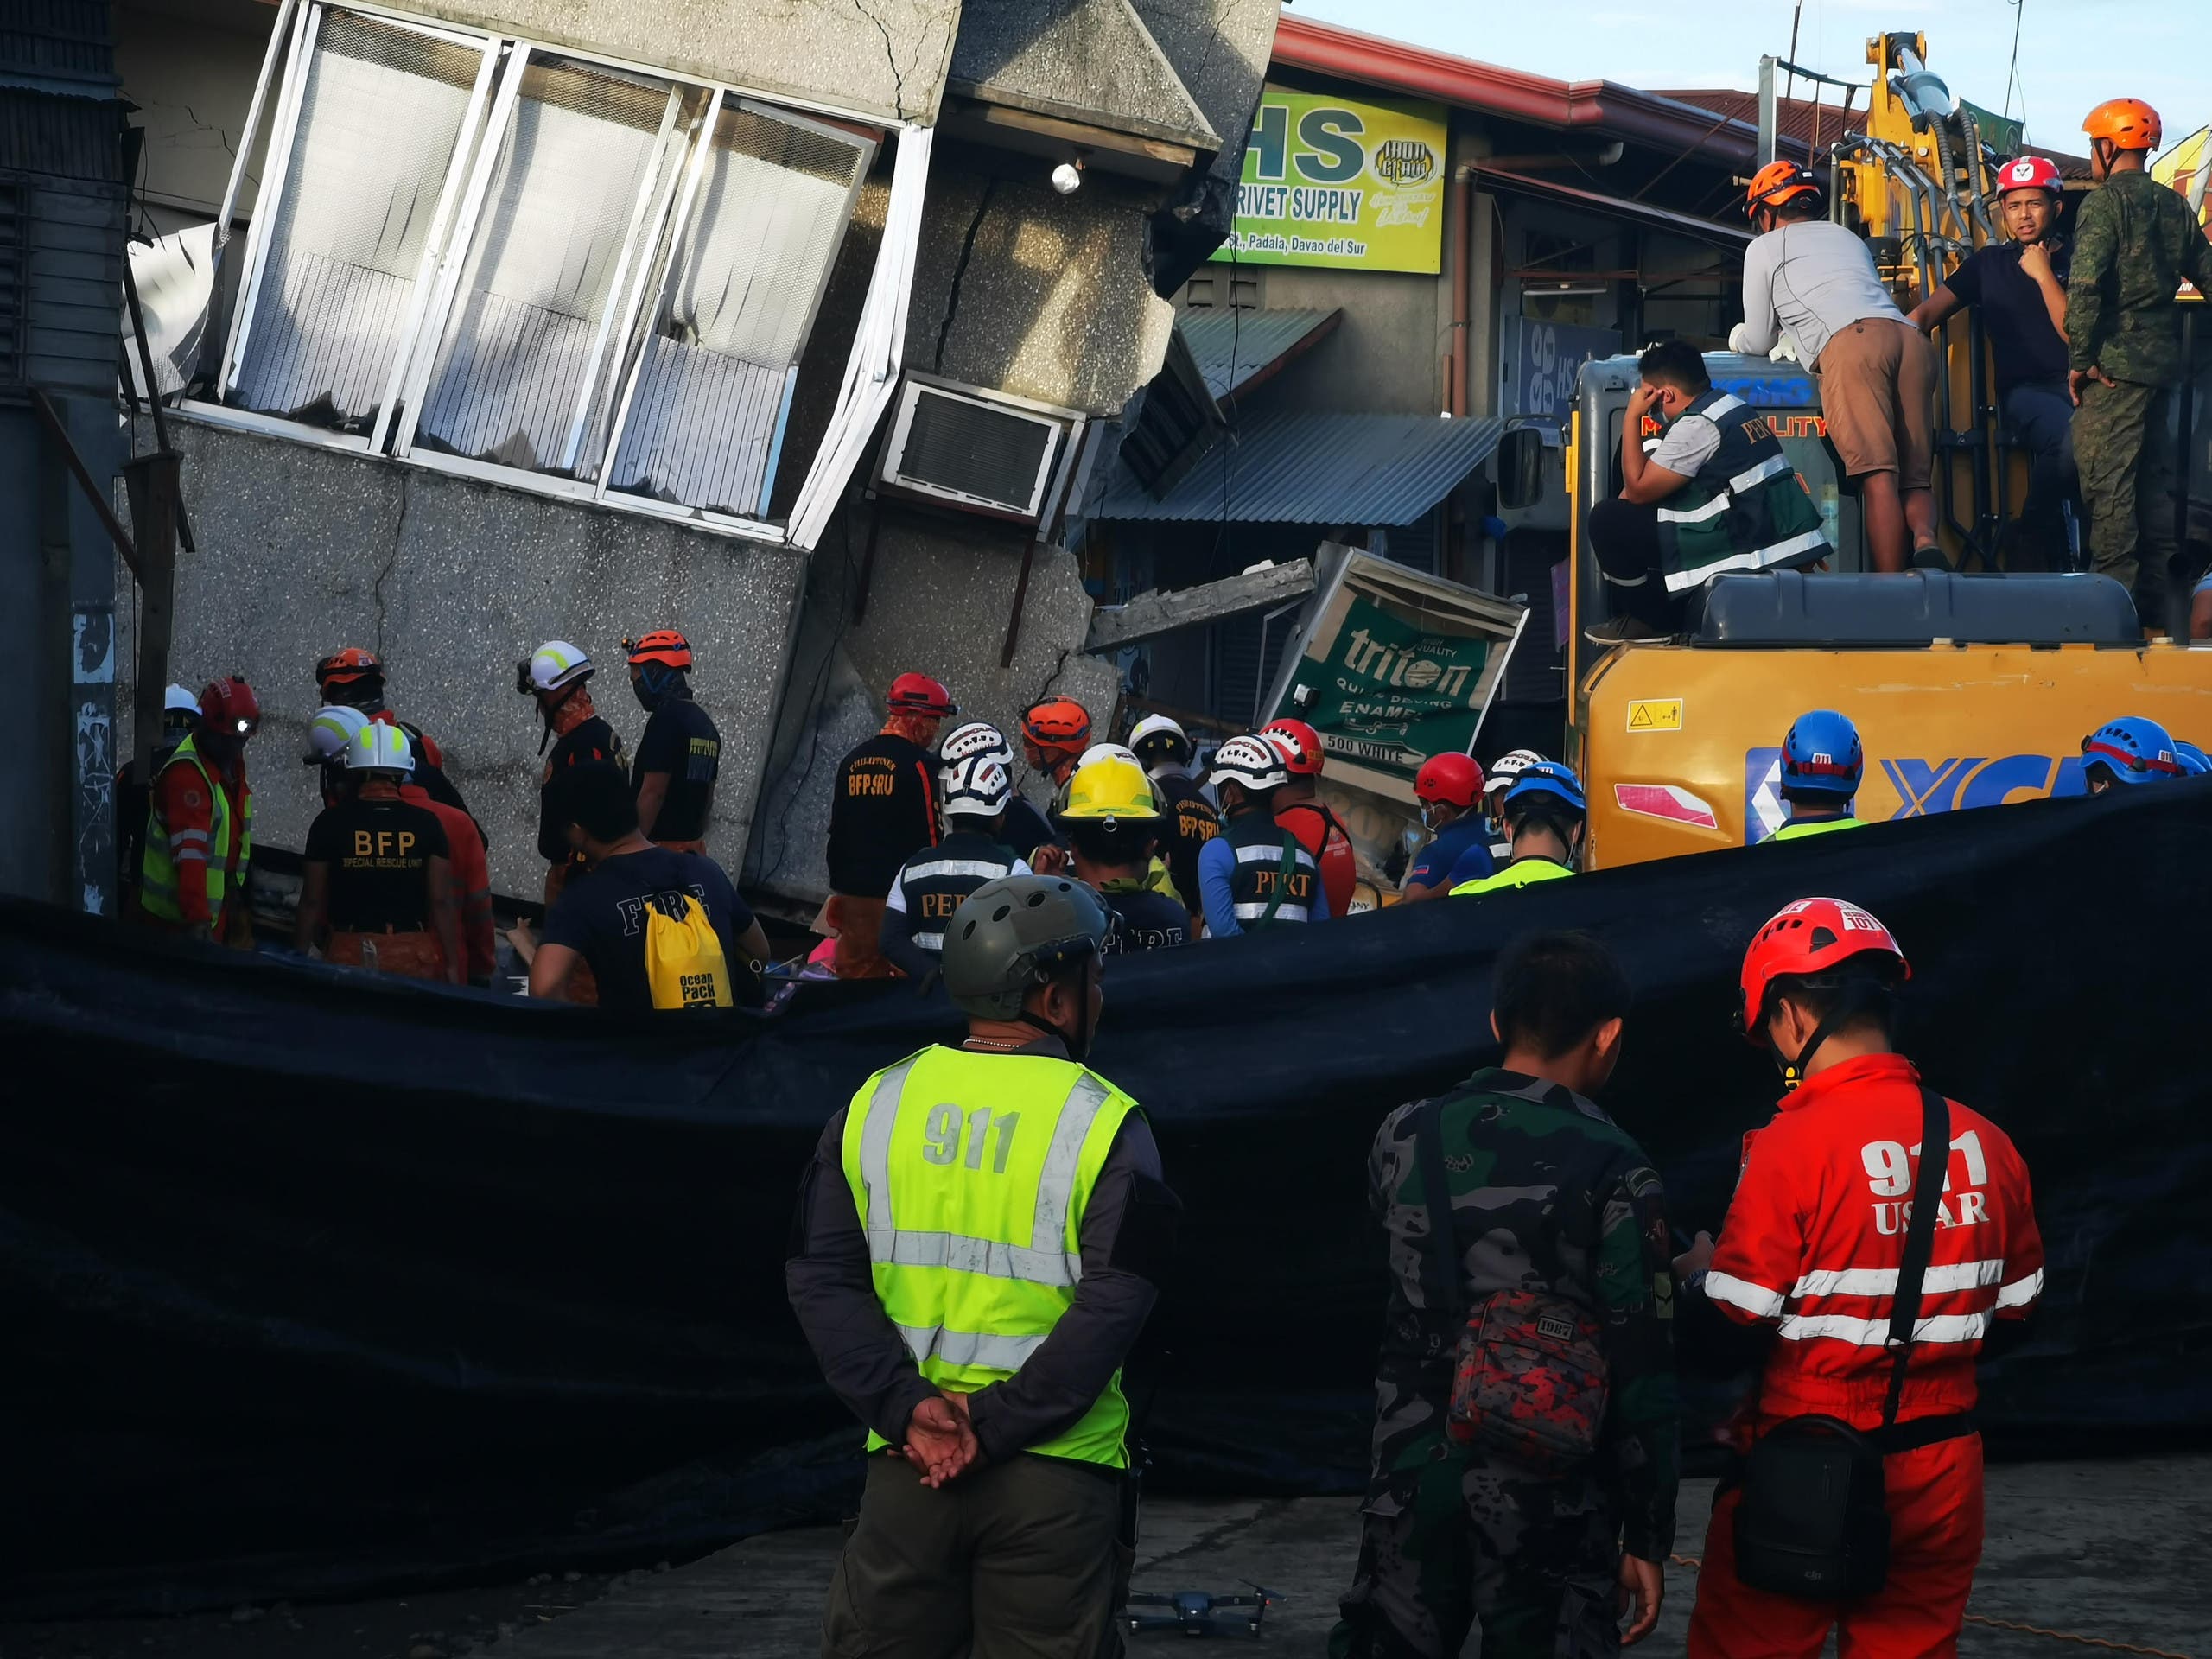 زلزال الفلبين 5 قتلى والبحث عن ناجين تحت أنقاض مركز تجاري 61d2800e-98c2-426a-86be-de106d7a2414